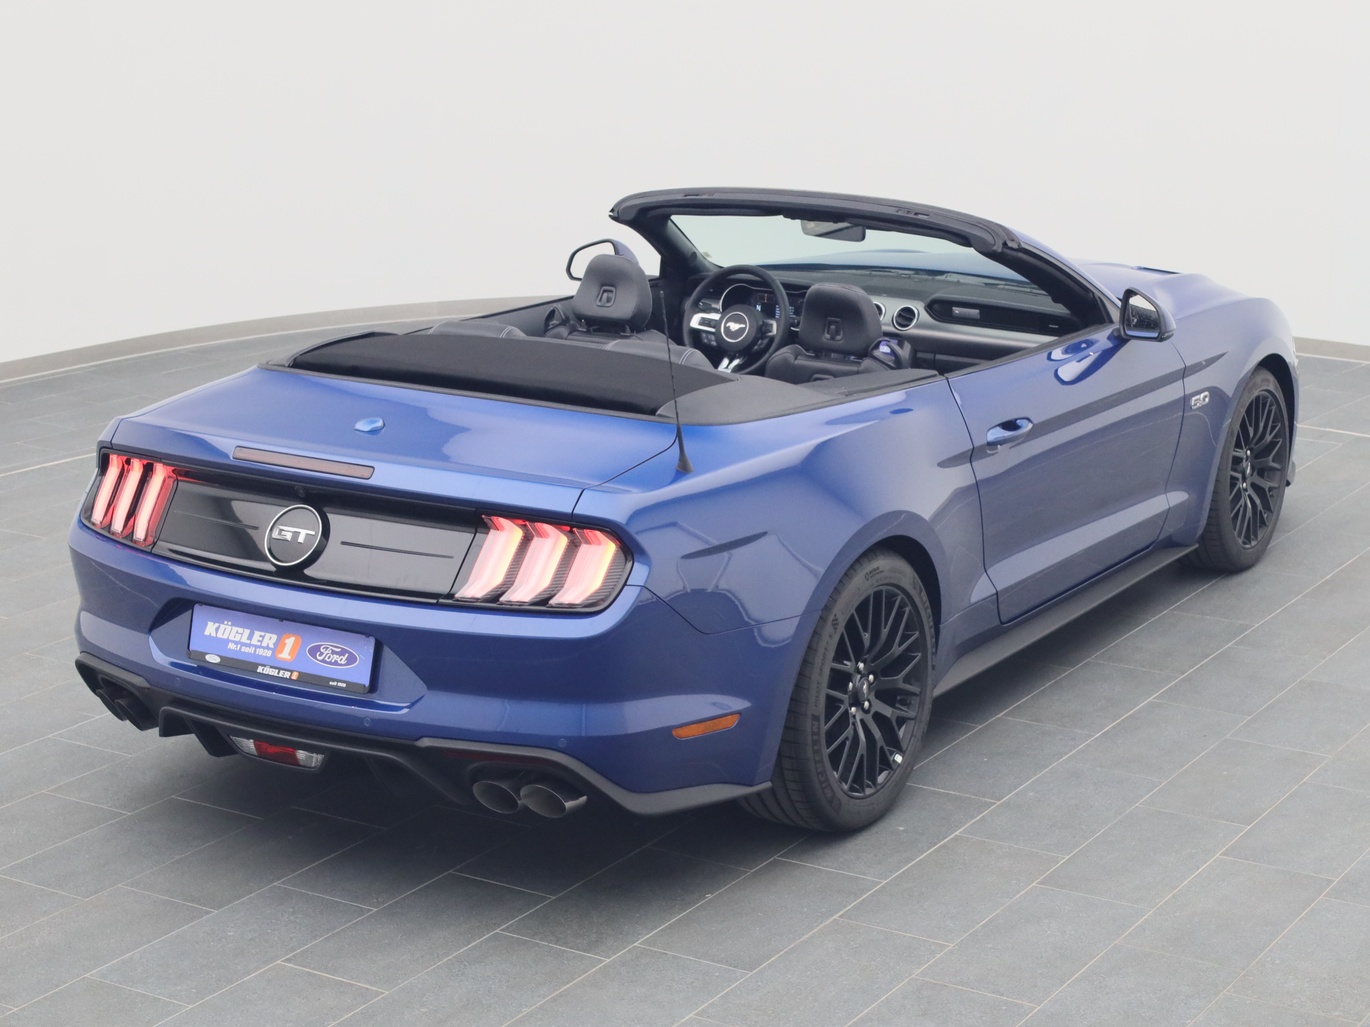  Ford Mustang GT Cabrio V8 450PS / Premium 2 / Magne in Atlas Blau 